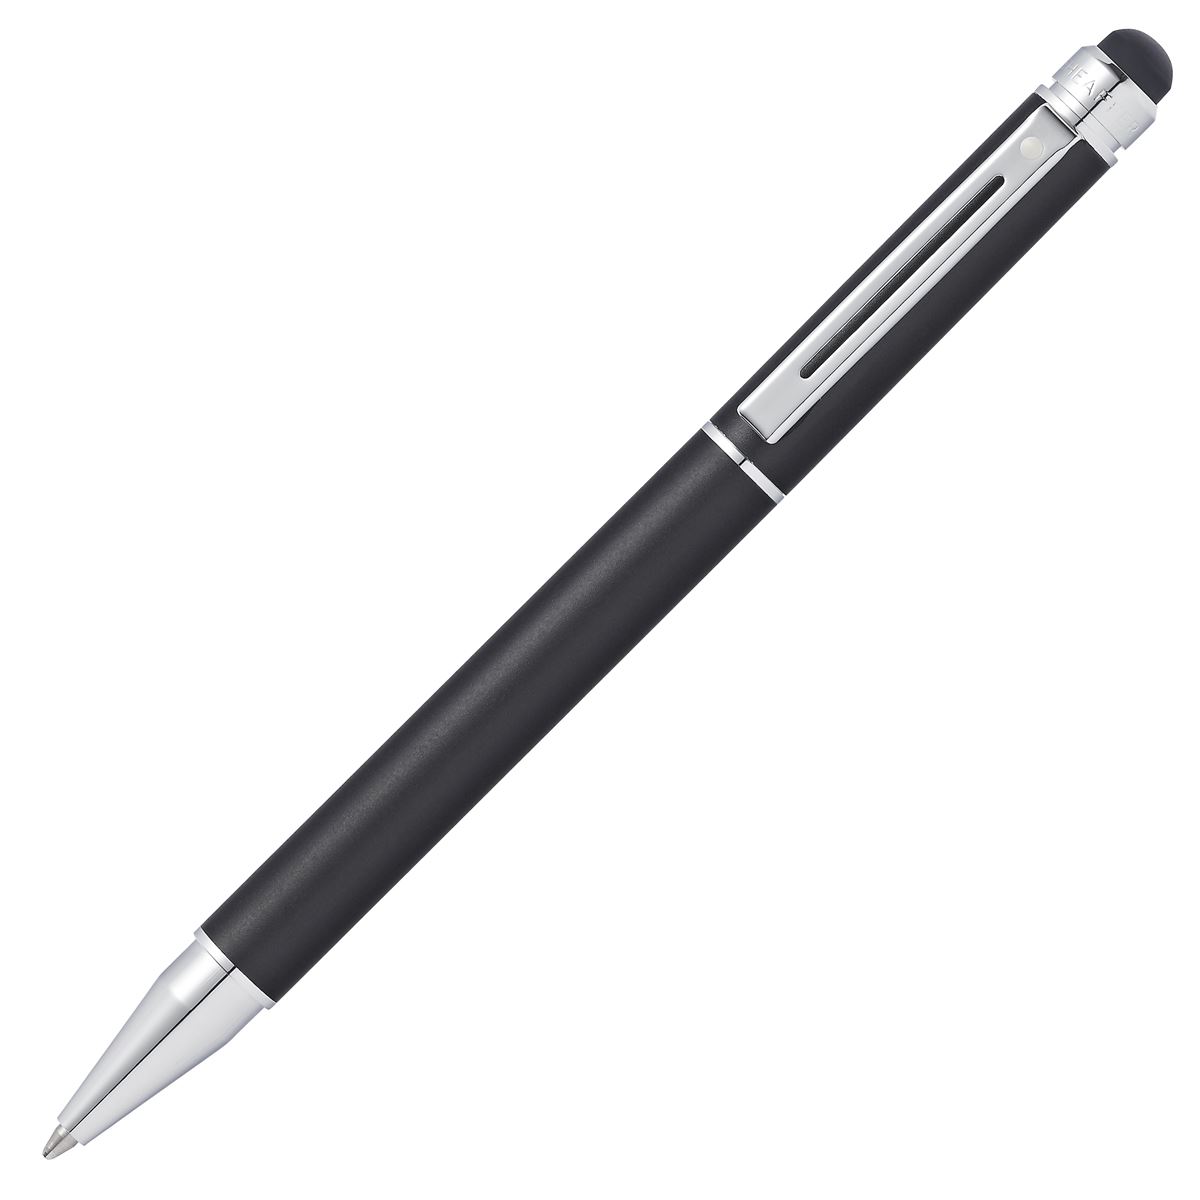 Bolígrafo metálico negro mate con stylus